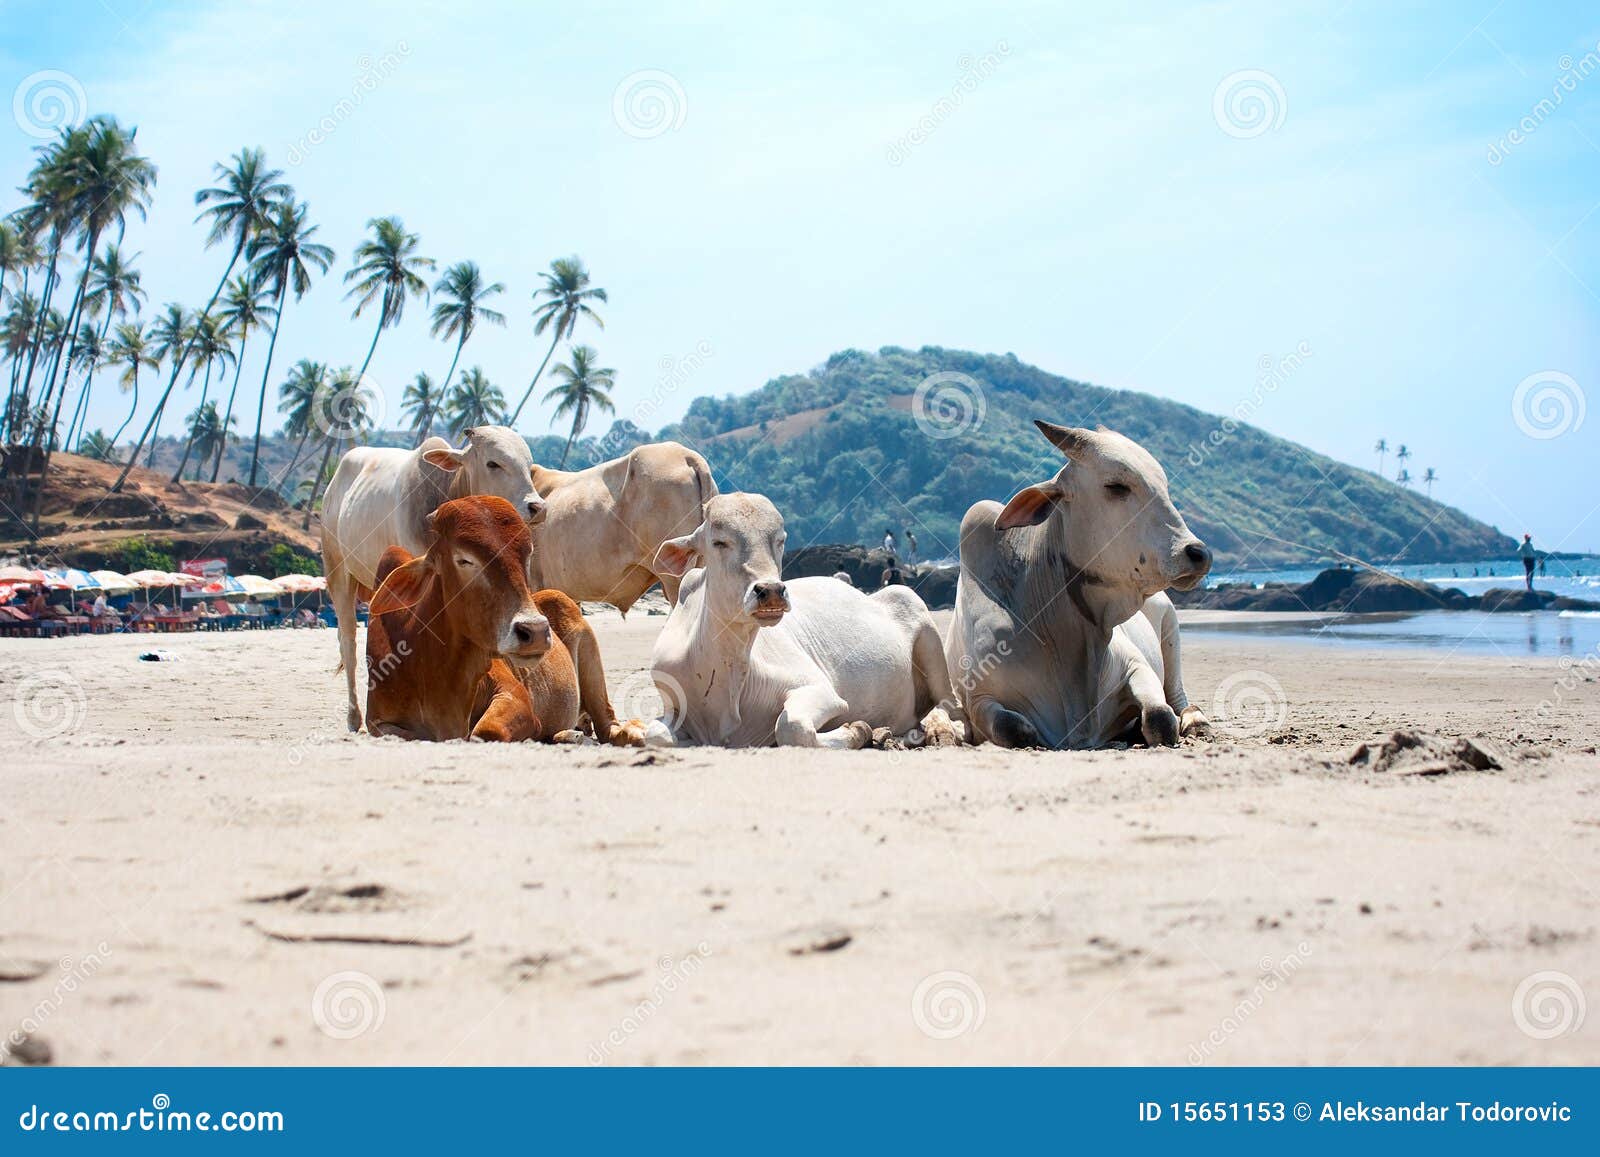 cow on tropical beach ,goa, india